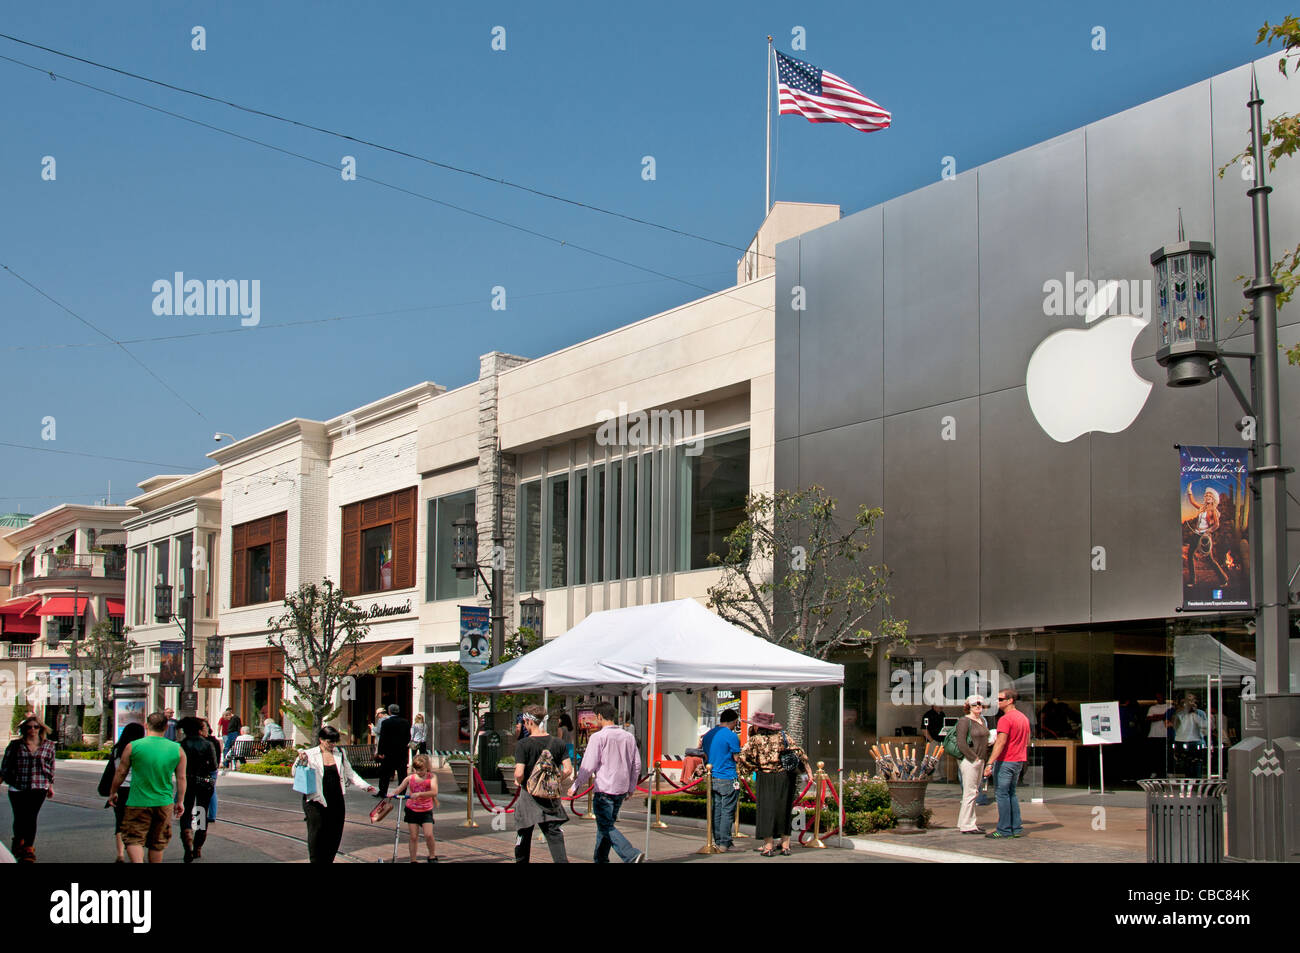 Apple iPod The Grove Farmers Market Entertainment Shopping Einkaufszentrum Los Angeles Kalifornien Vereinigte Staaten Stockfoto